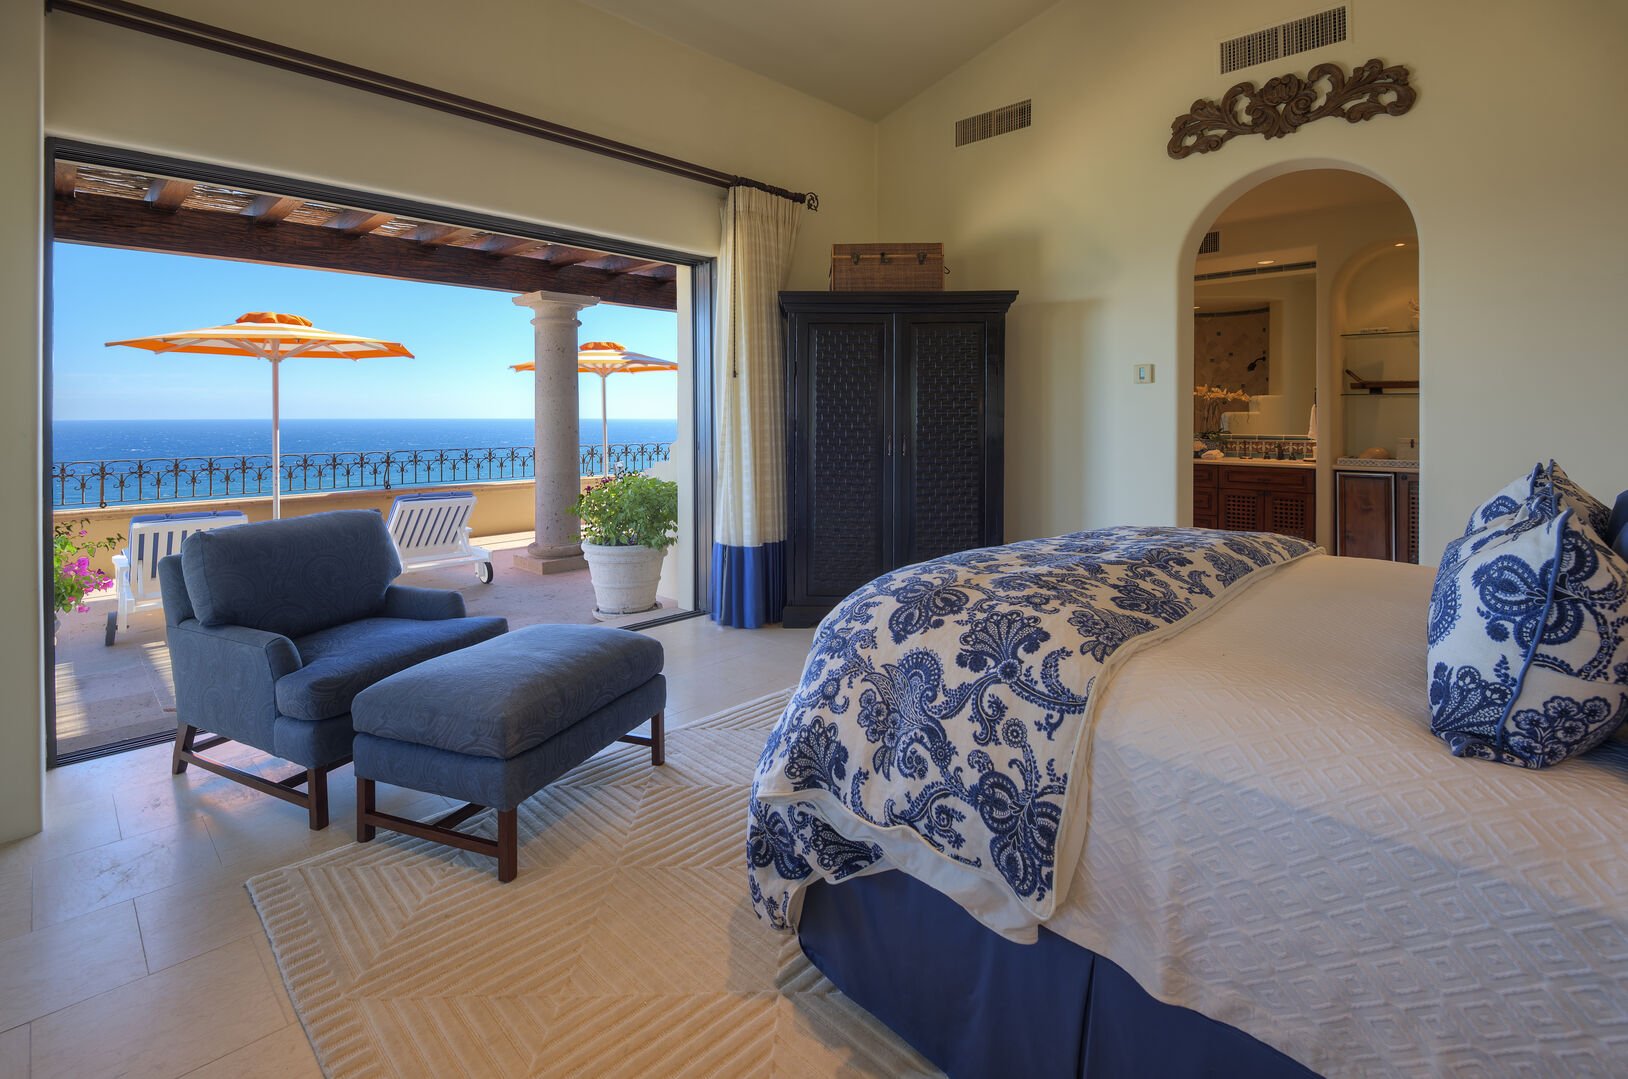 Bedroom with ocean views